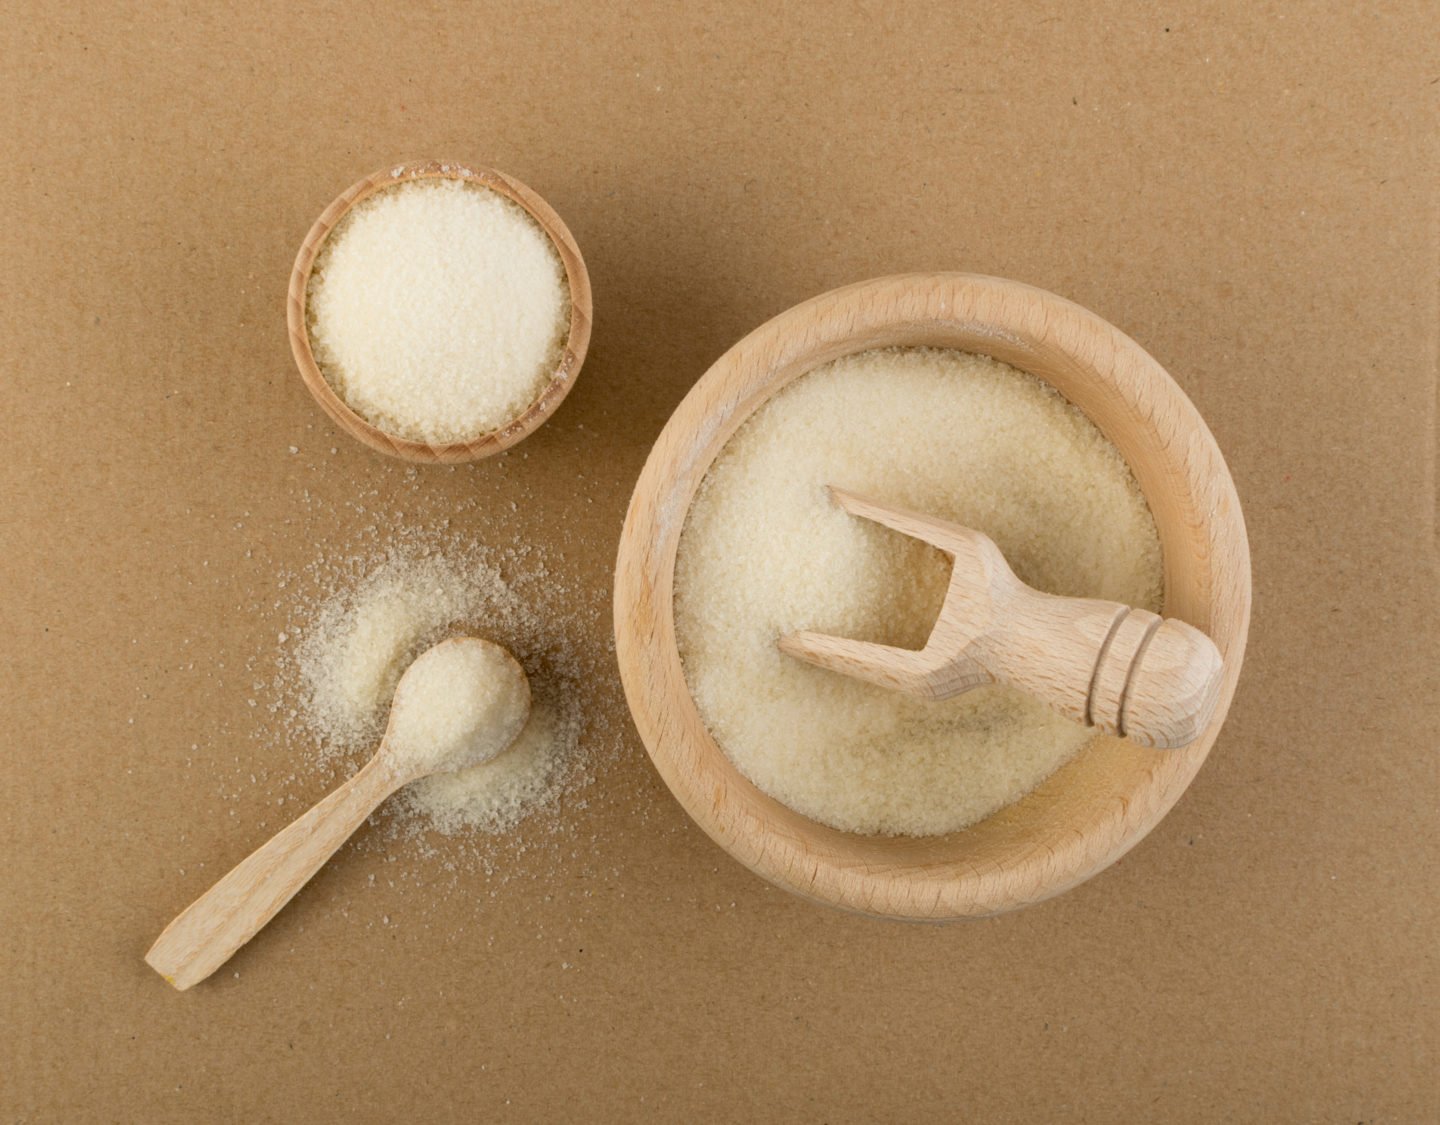 Organic Gelatin Powder In Wooden Bowls And Spoon